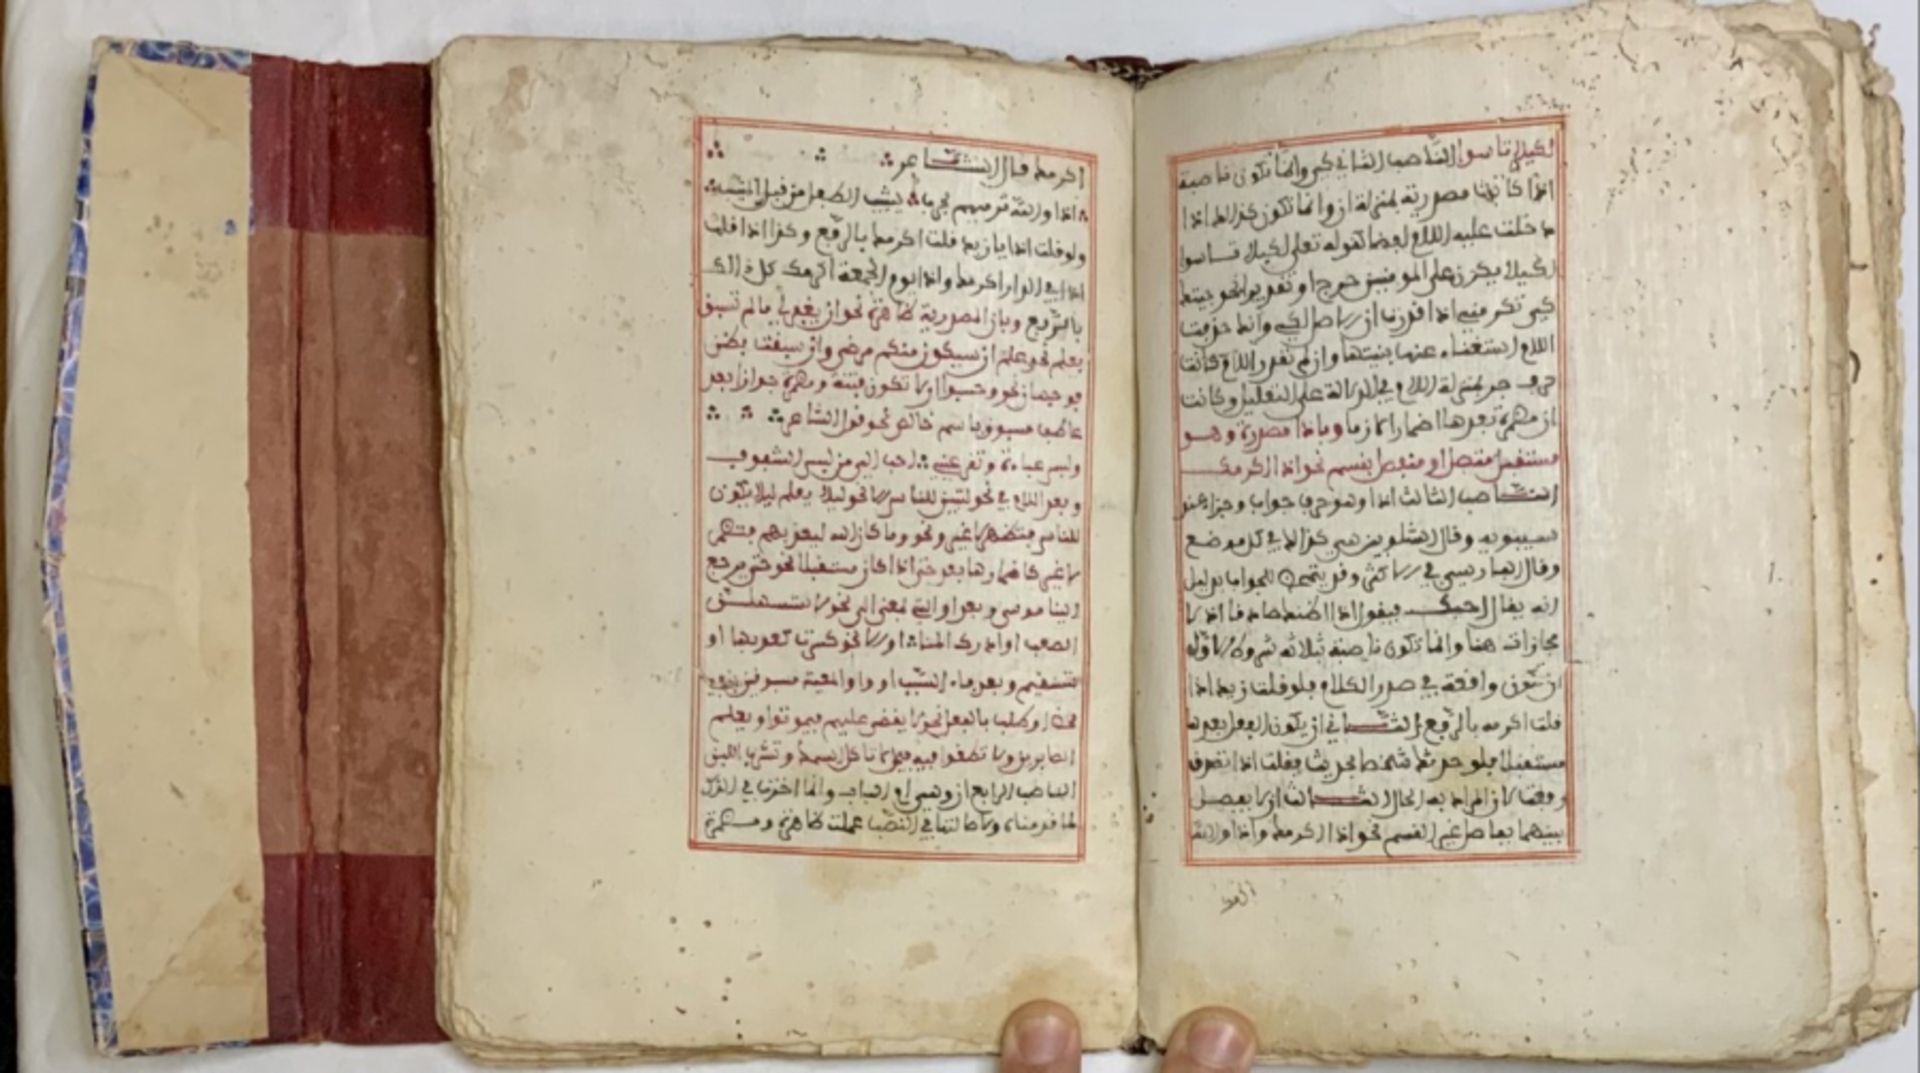 18th century Islamic manuscript on morphology and rhetoric - Image 11 of 18